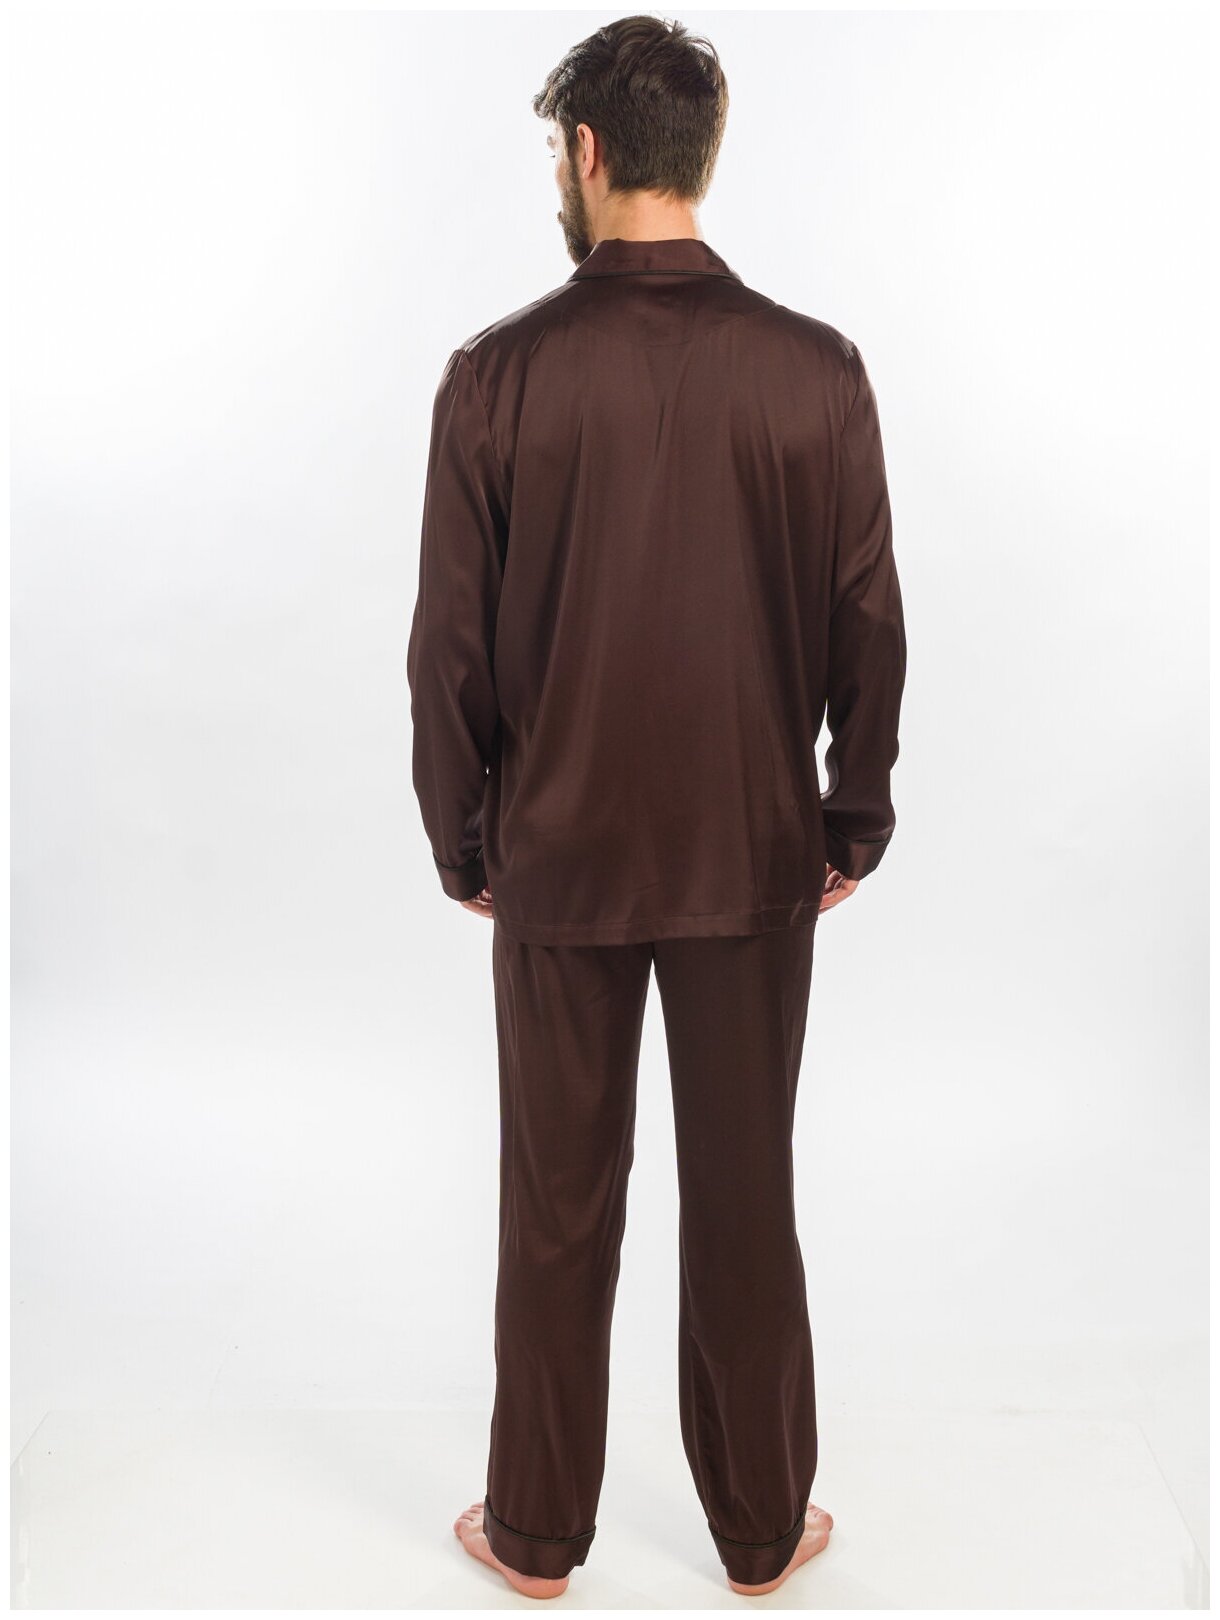 Пижама мужская Nicole Home размер XXL коричневая - фотография № 4